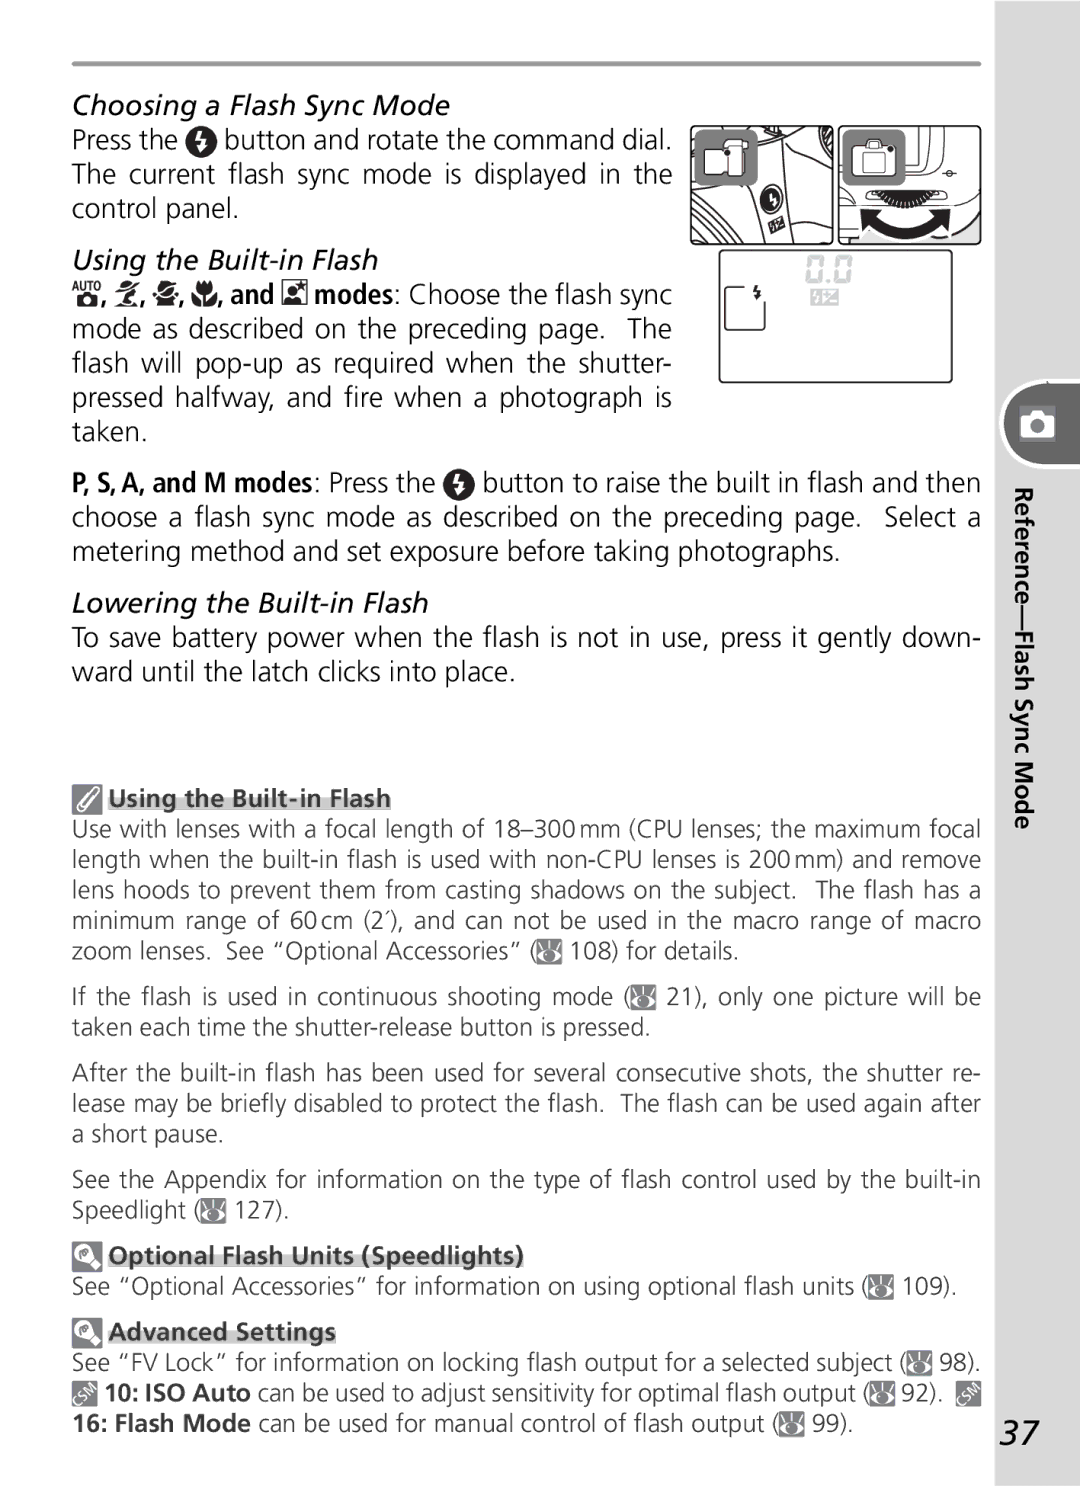 Nikon D50 manual Choosing a Flash Sync Mode, Using the Built-in Flash, Lowering the Built-in Flash 